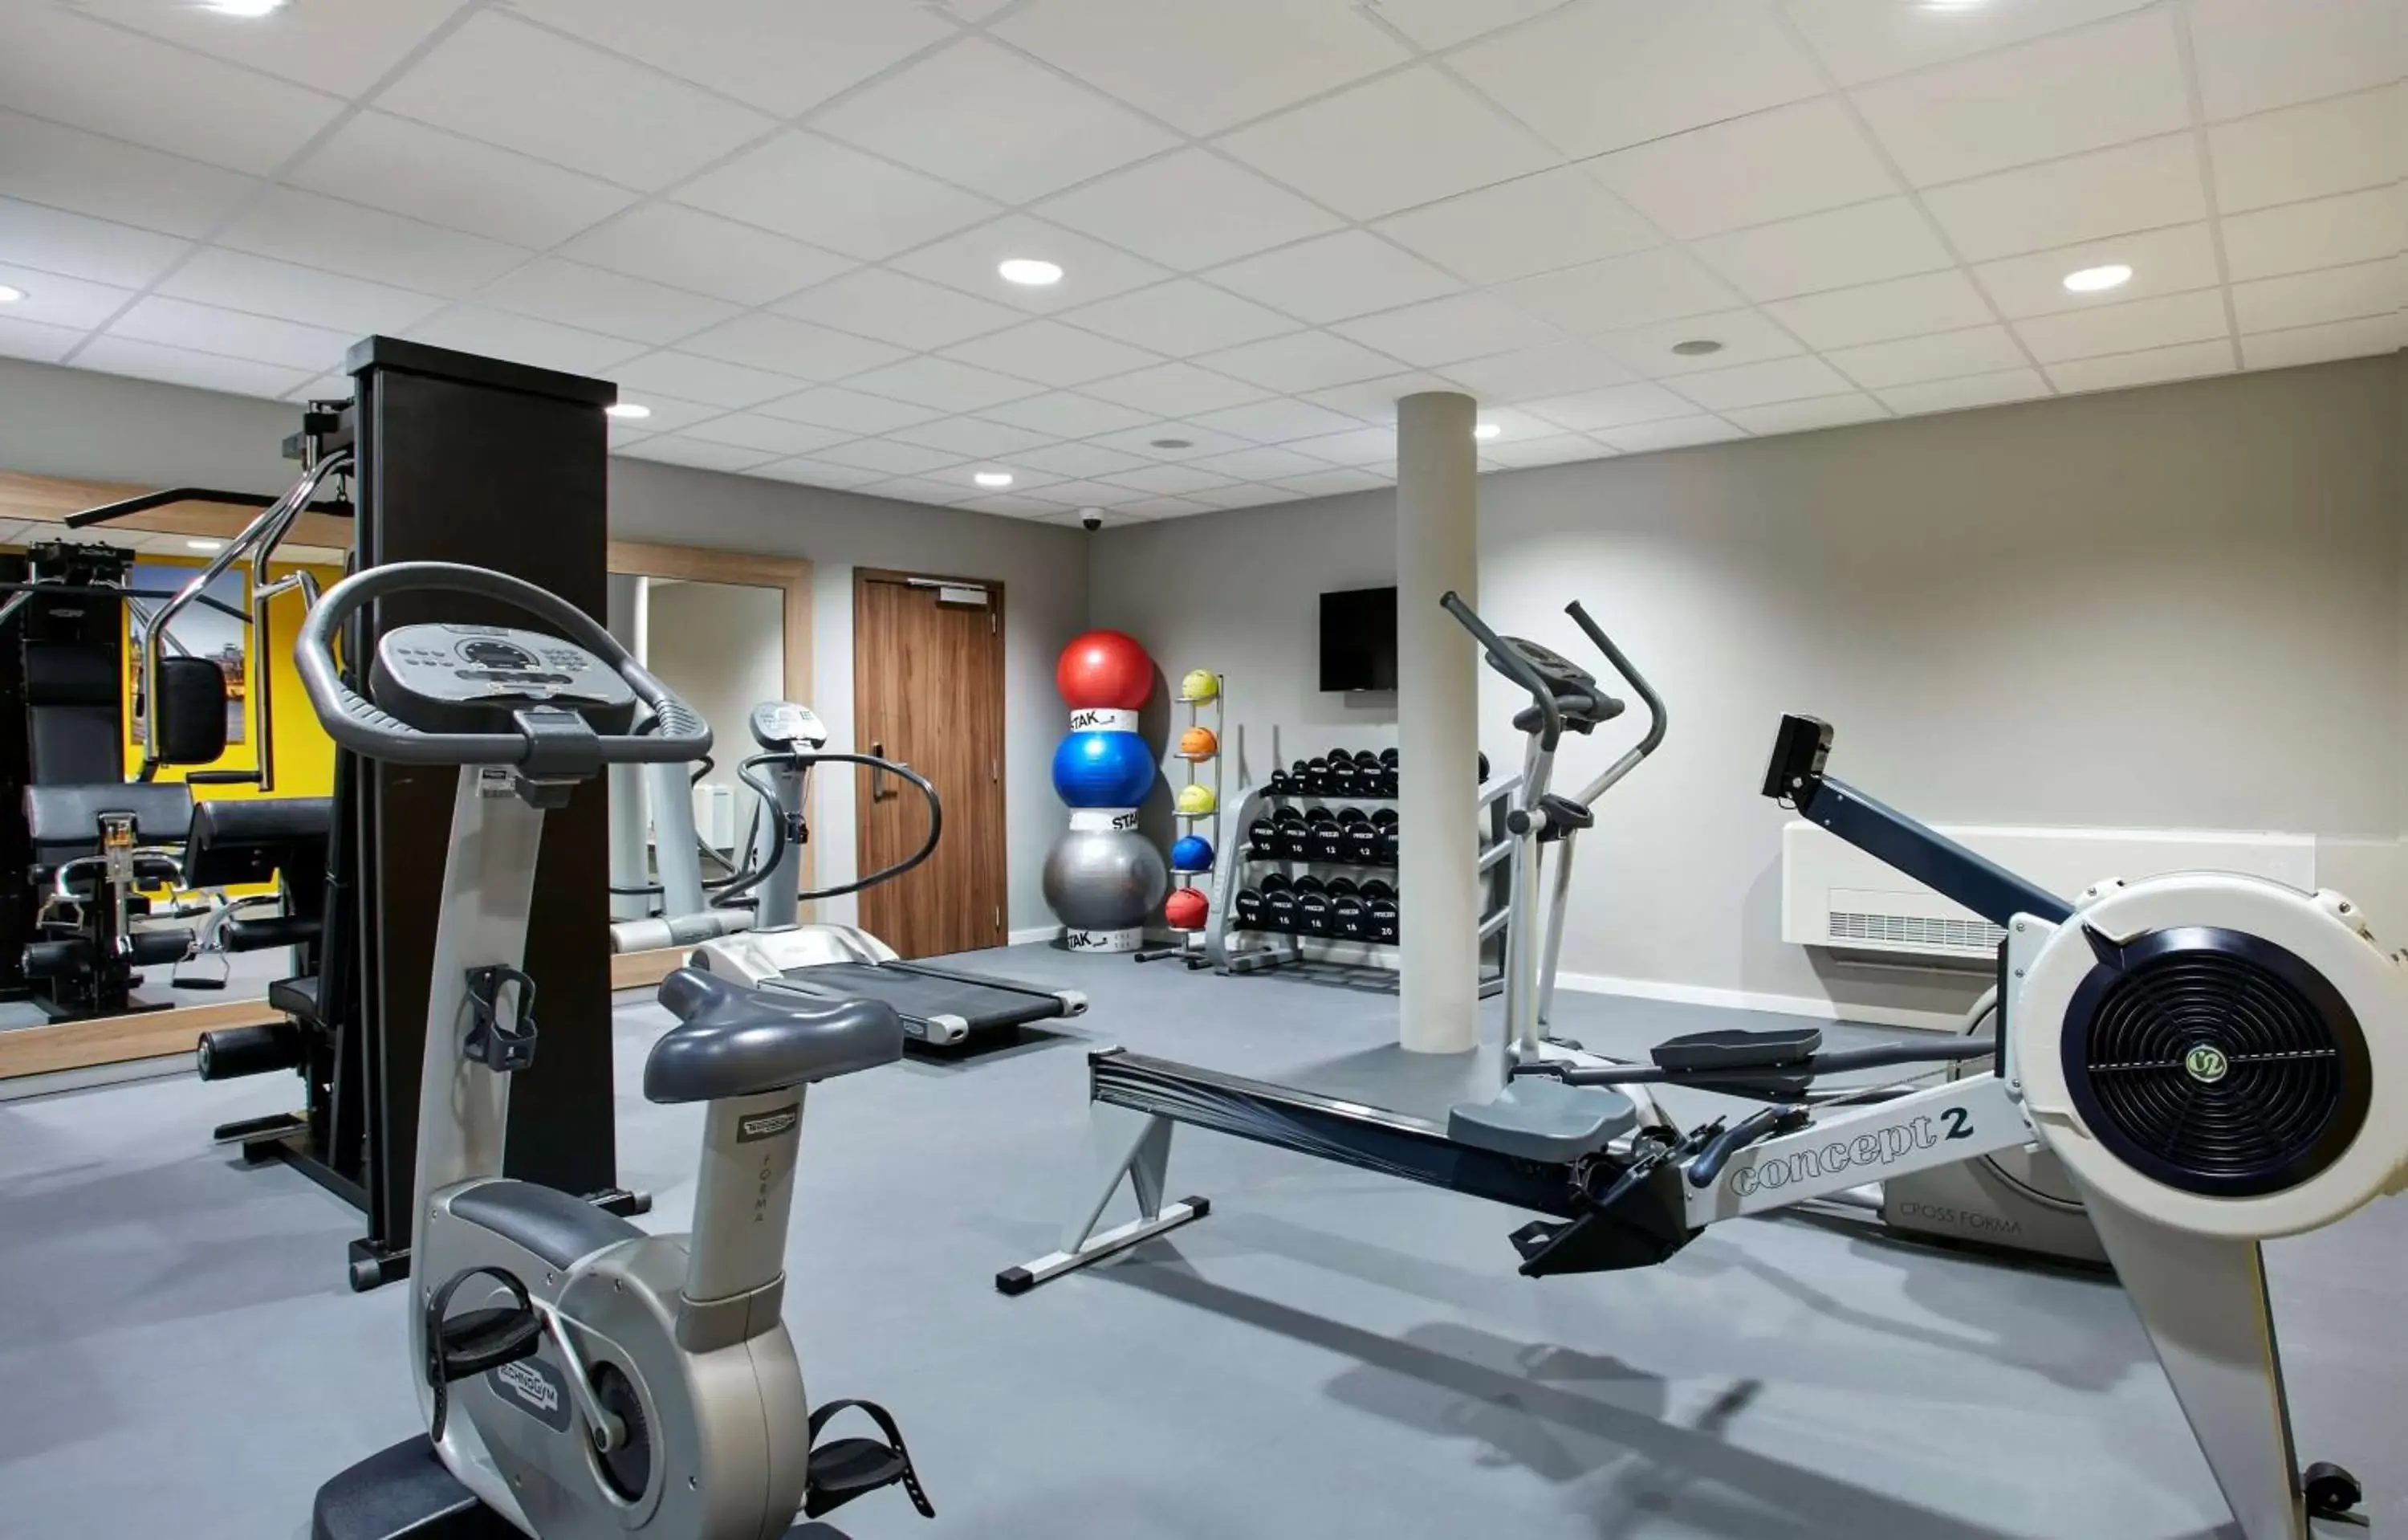 Fitness centre/facilities, Fitness Center/Facilities in Hilton Garden Inn Brussels City Centre